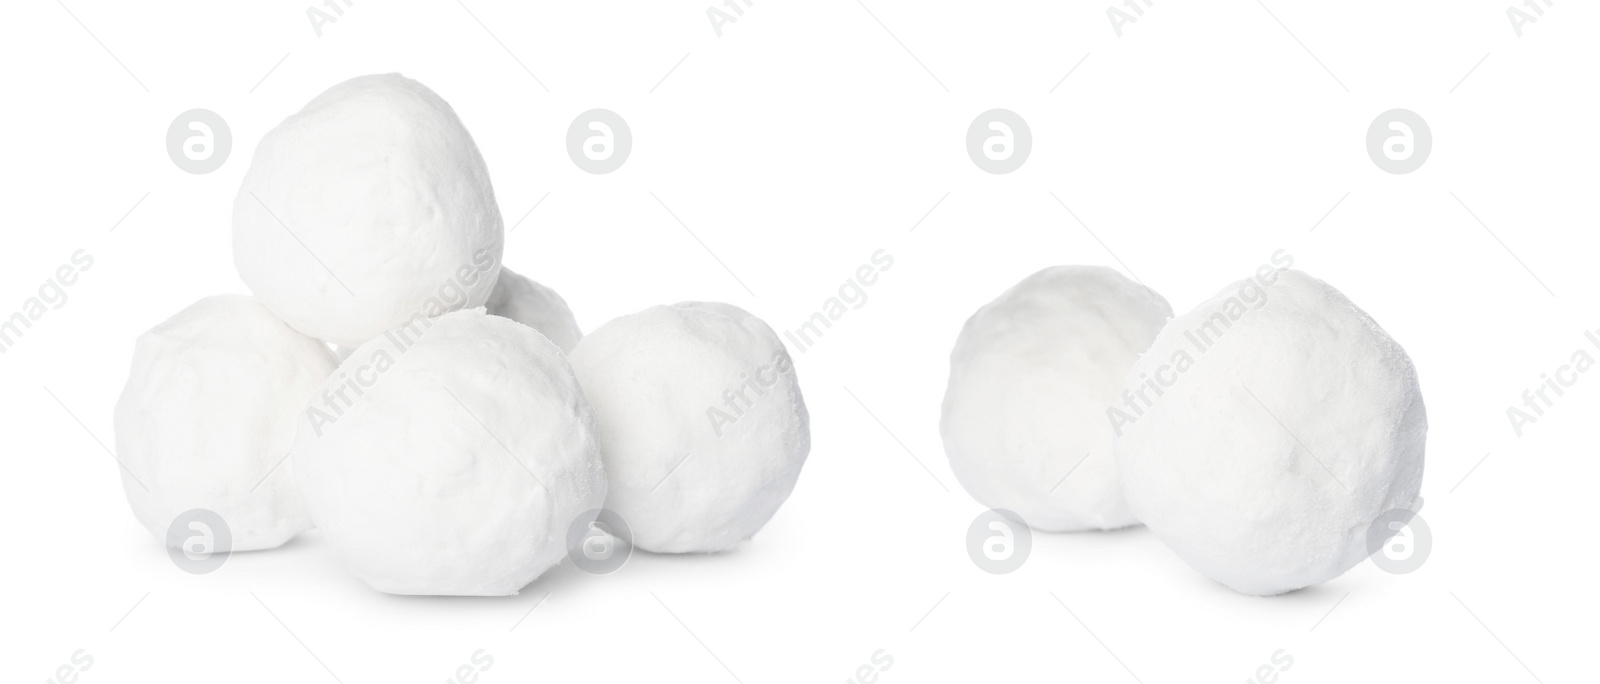 Image of Set of snowballs on white background. Banner design